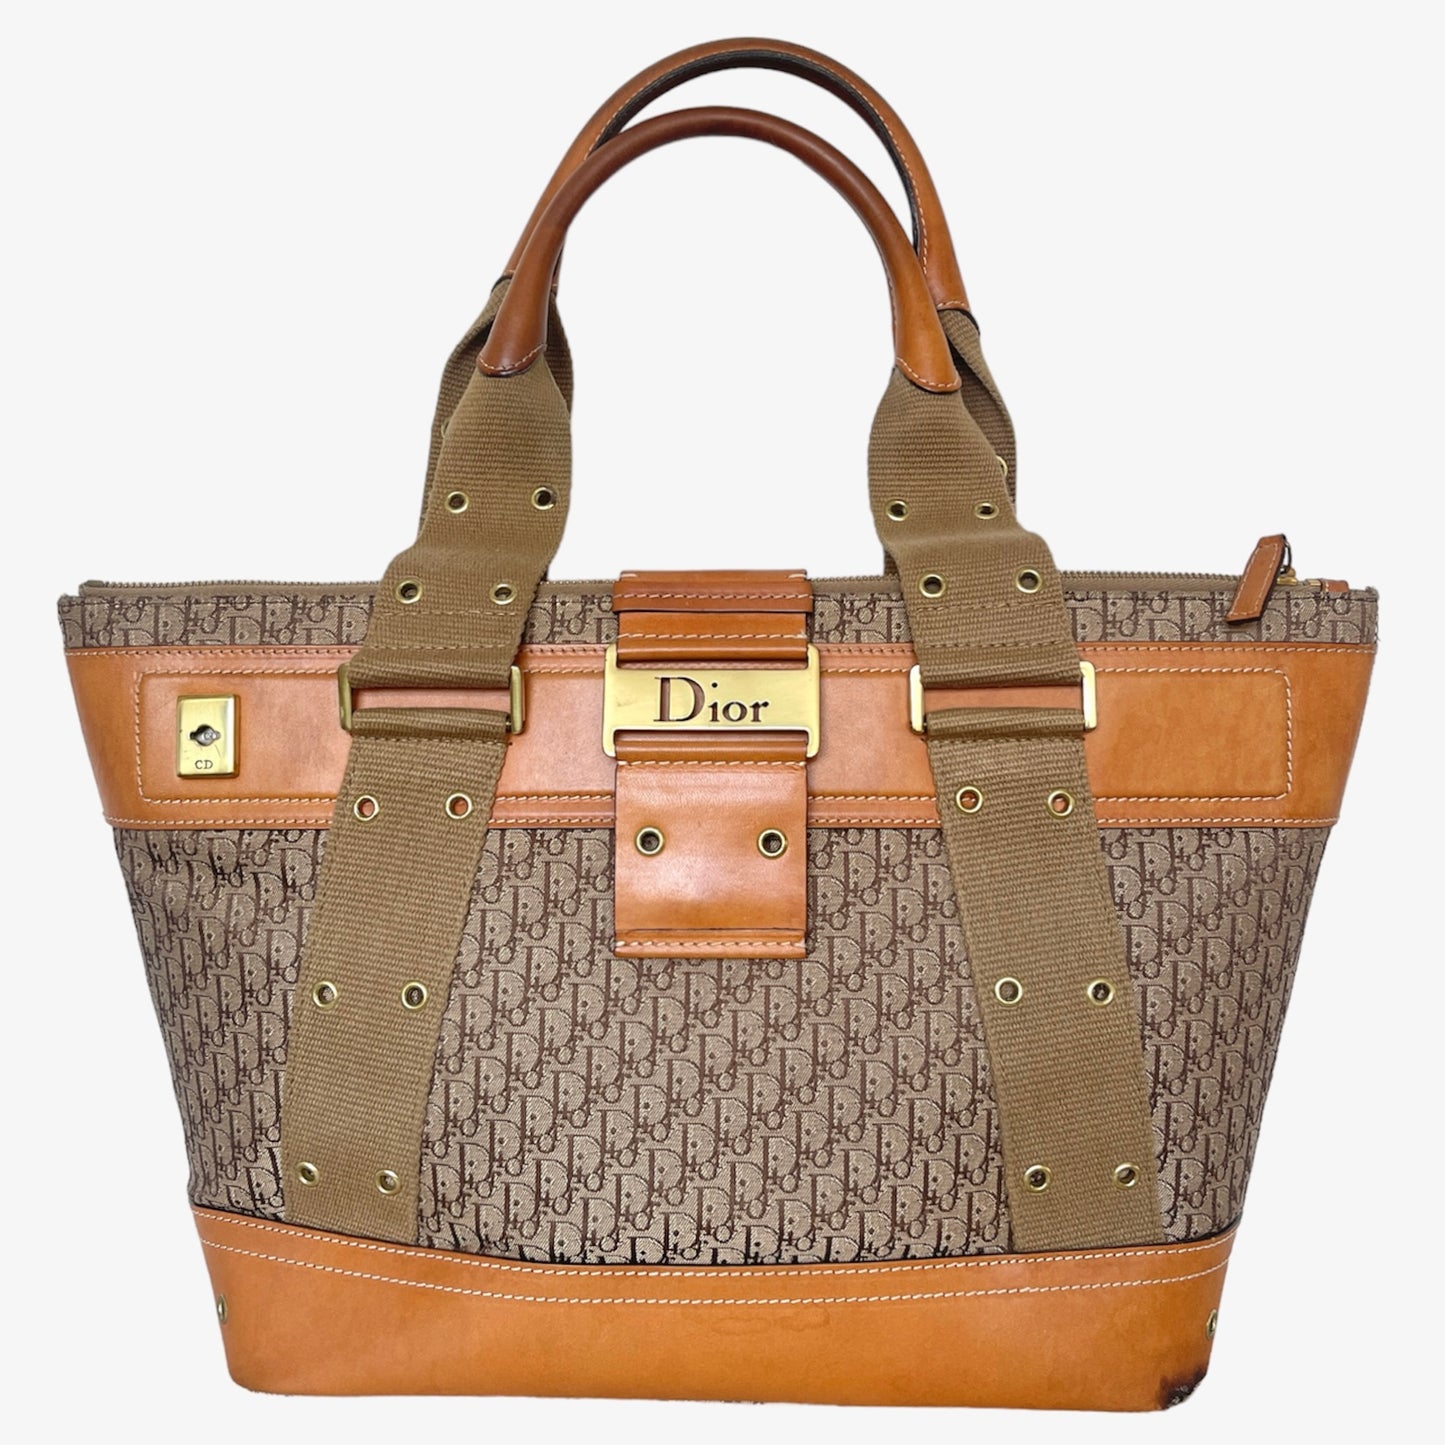 Christian Dior Street Chic trotter handbag.